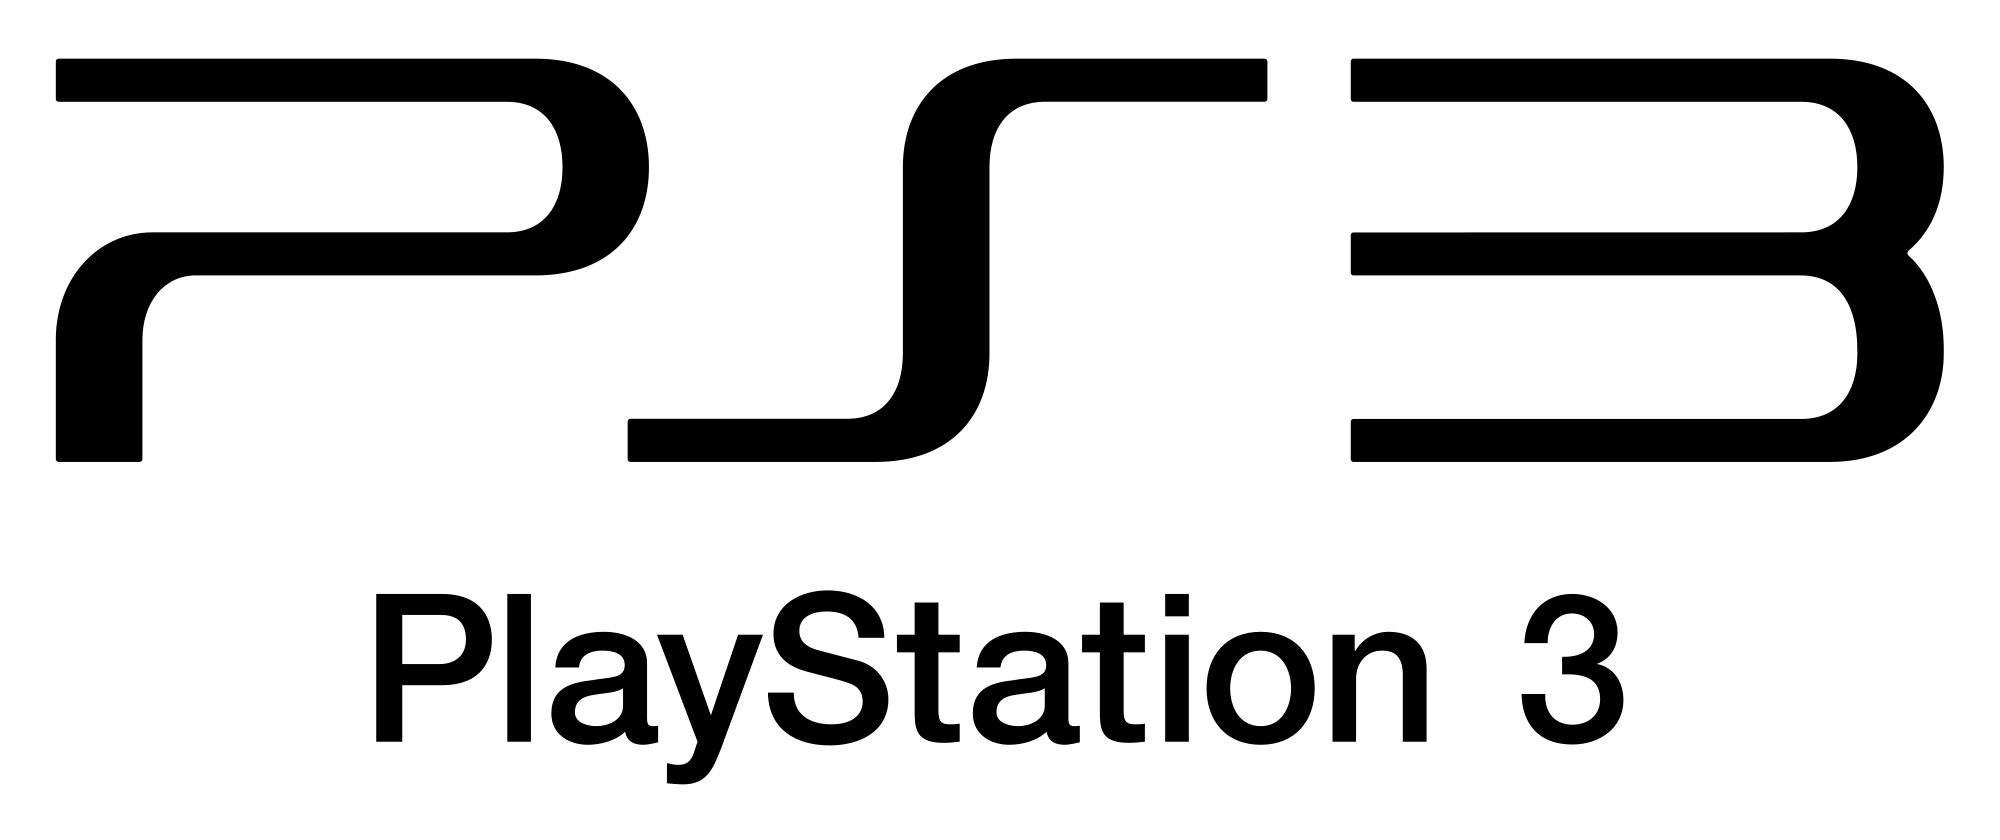 PS3 Logo - File:PlayStation 3 Logo neu.svg - Wikimedia Commons